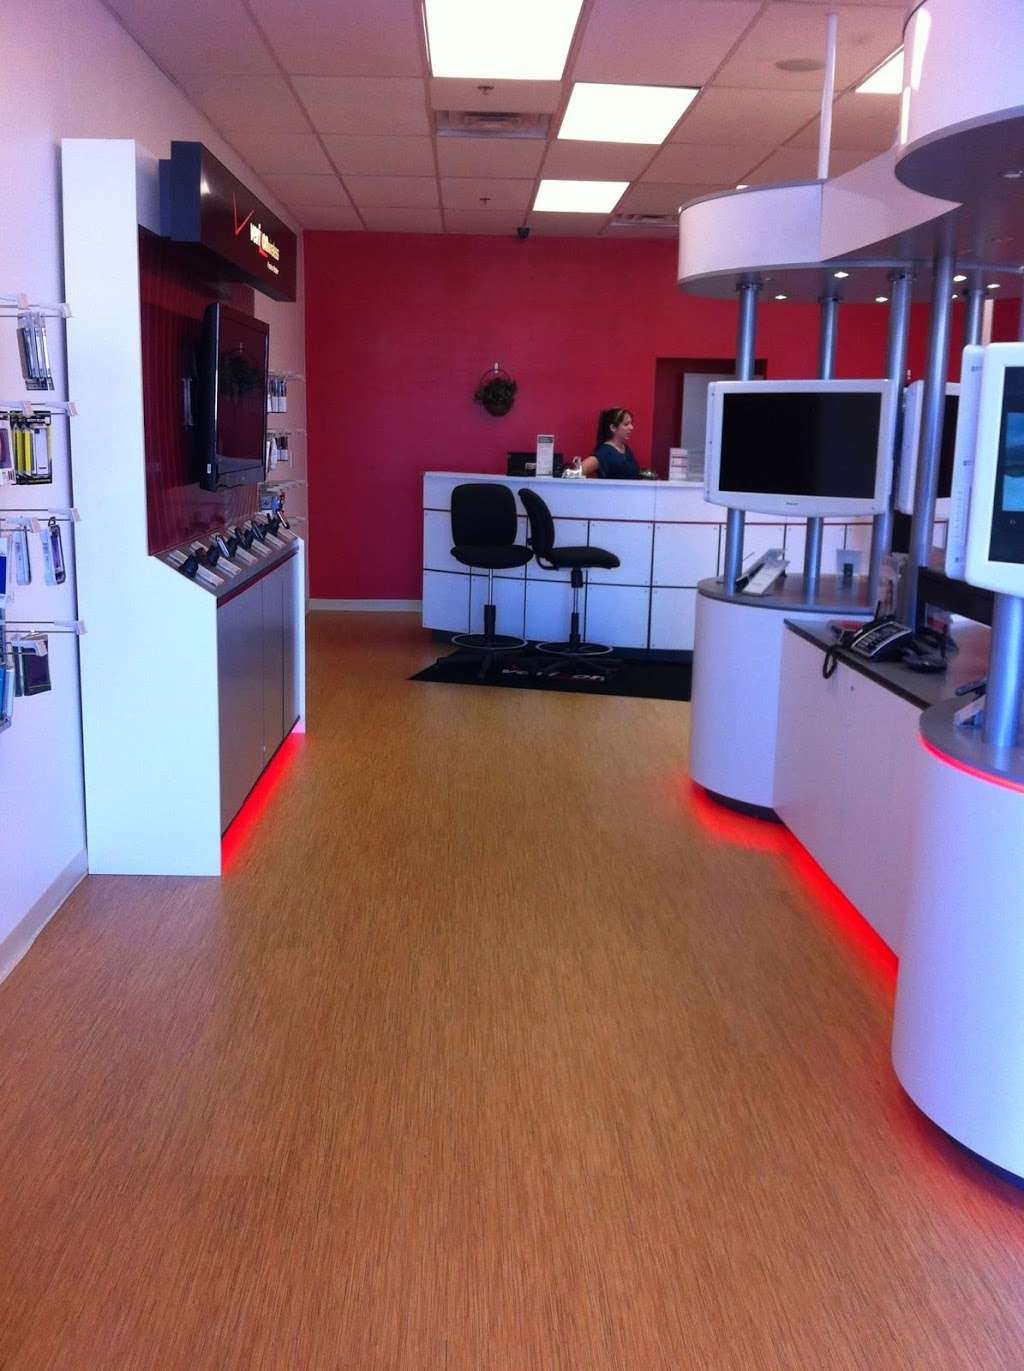 Verizon Authorized Retailer - The Wireless Center | 1020 E Main St G, Purcellville, VA 20132 | Phone: (540) 751-1156